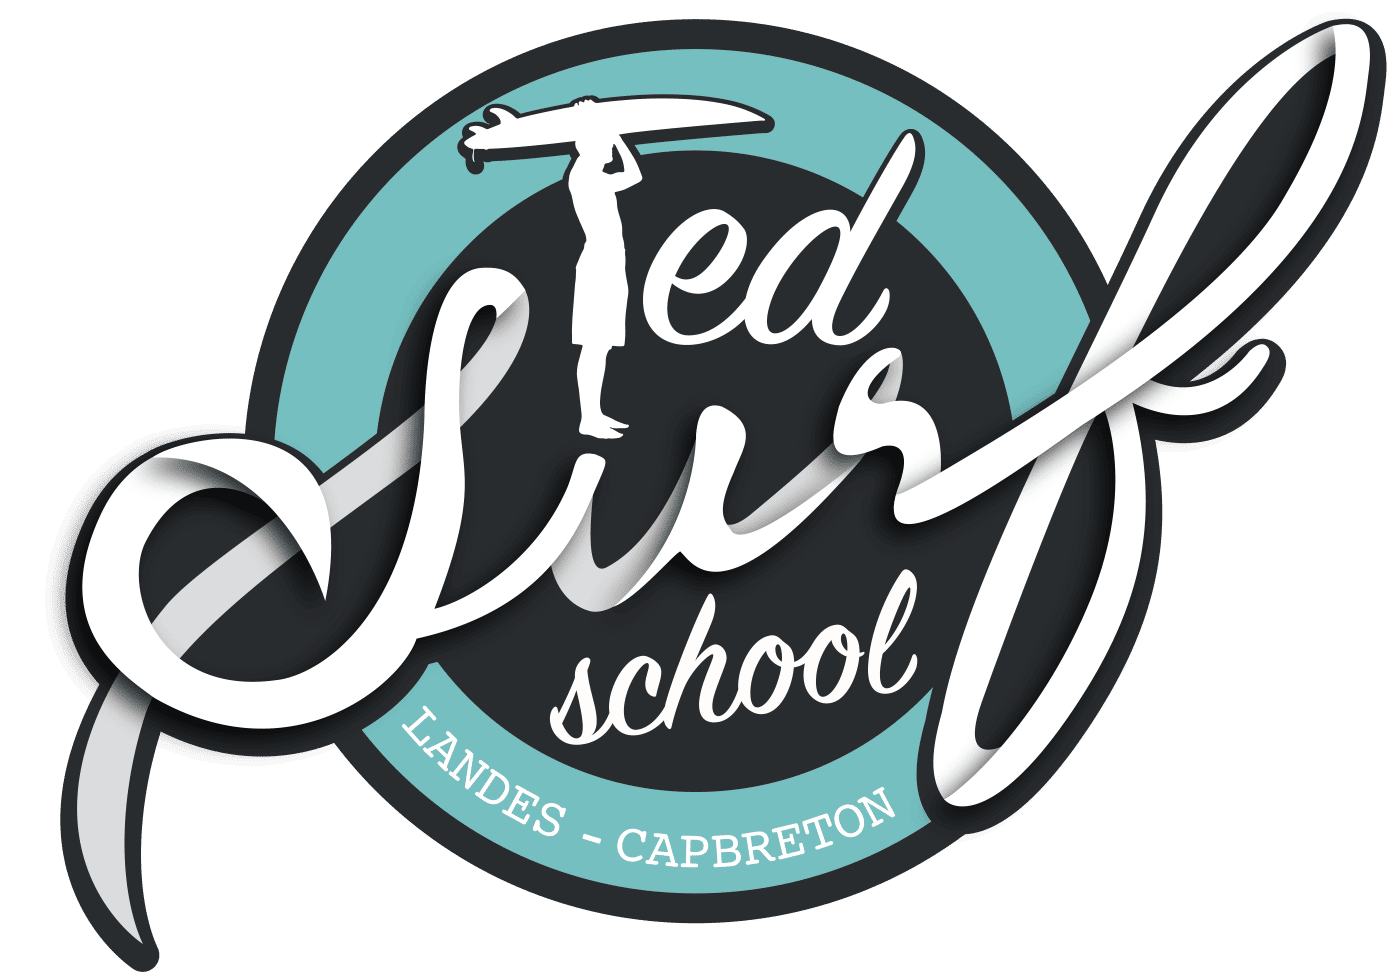 Ted Surf School